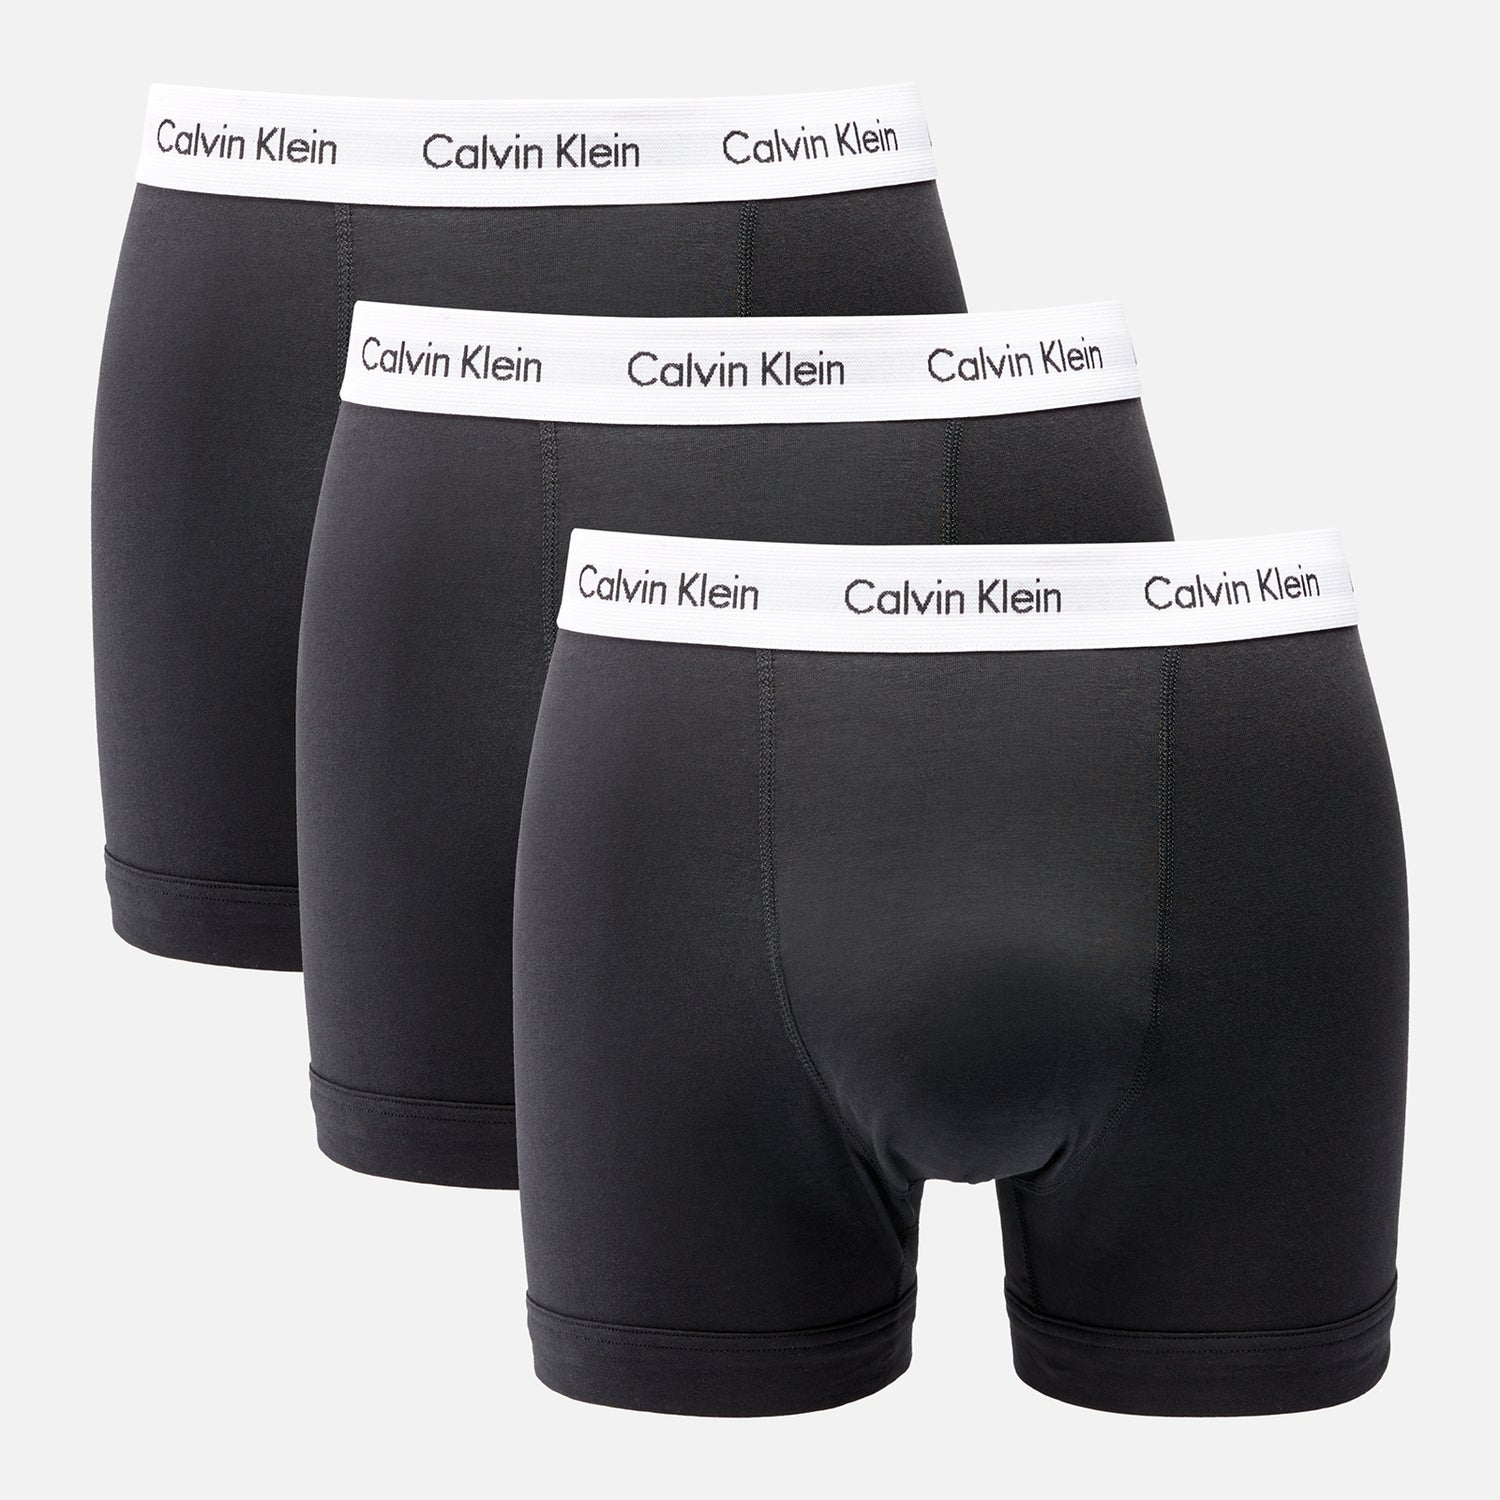 Calvin Klein Men's Cotton Stretch 3-Pack Trunks - Black - XL